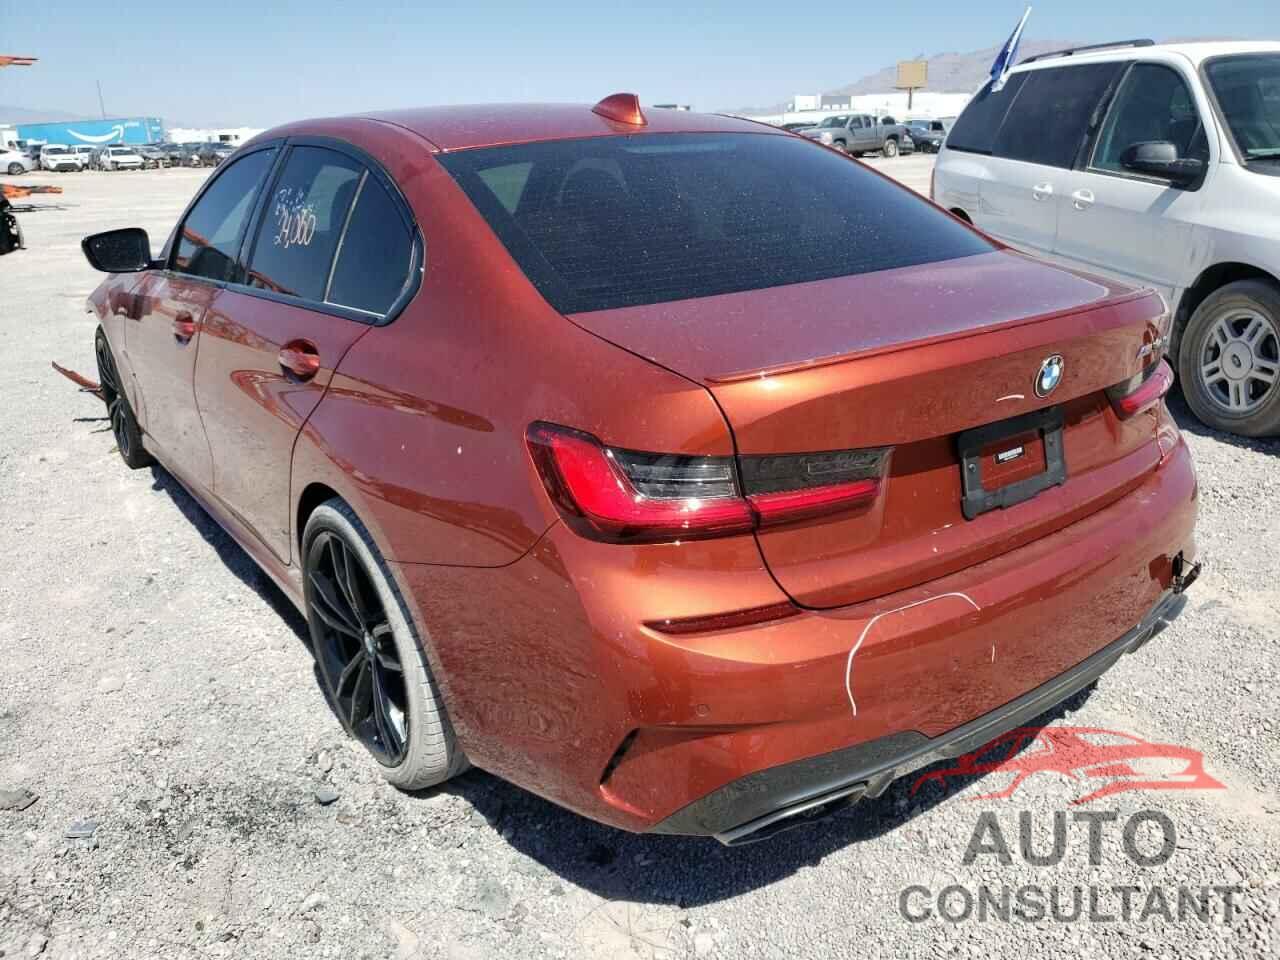 BMW M3 2020 - WBA5U7C08LFH97341